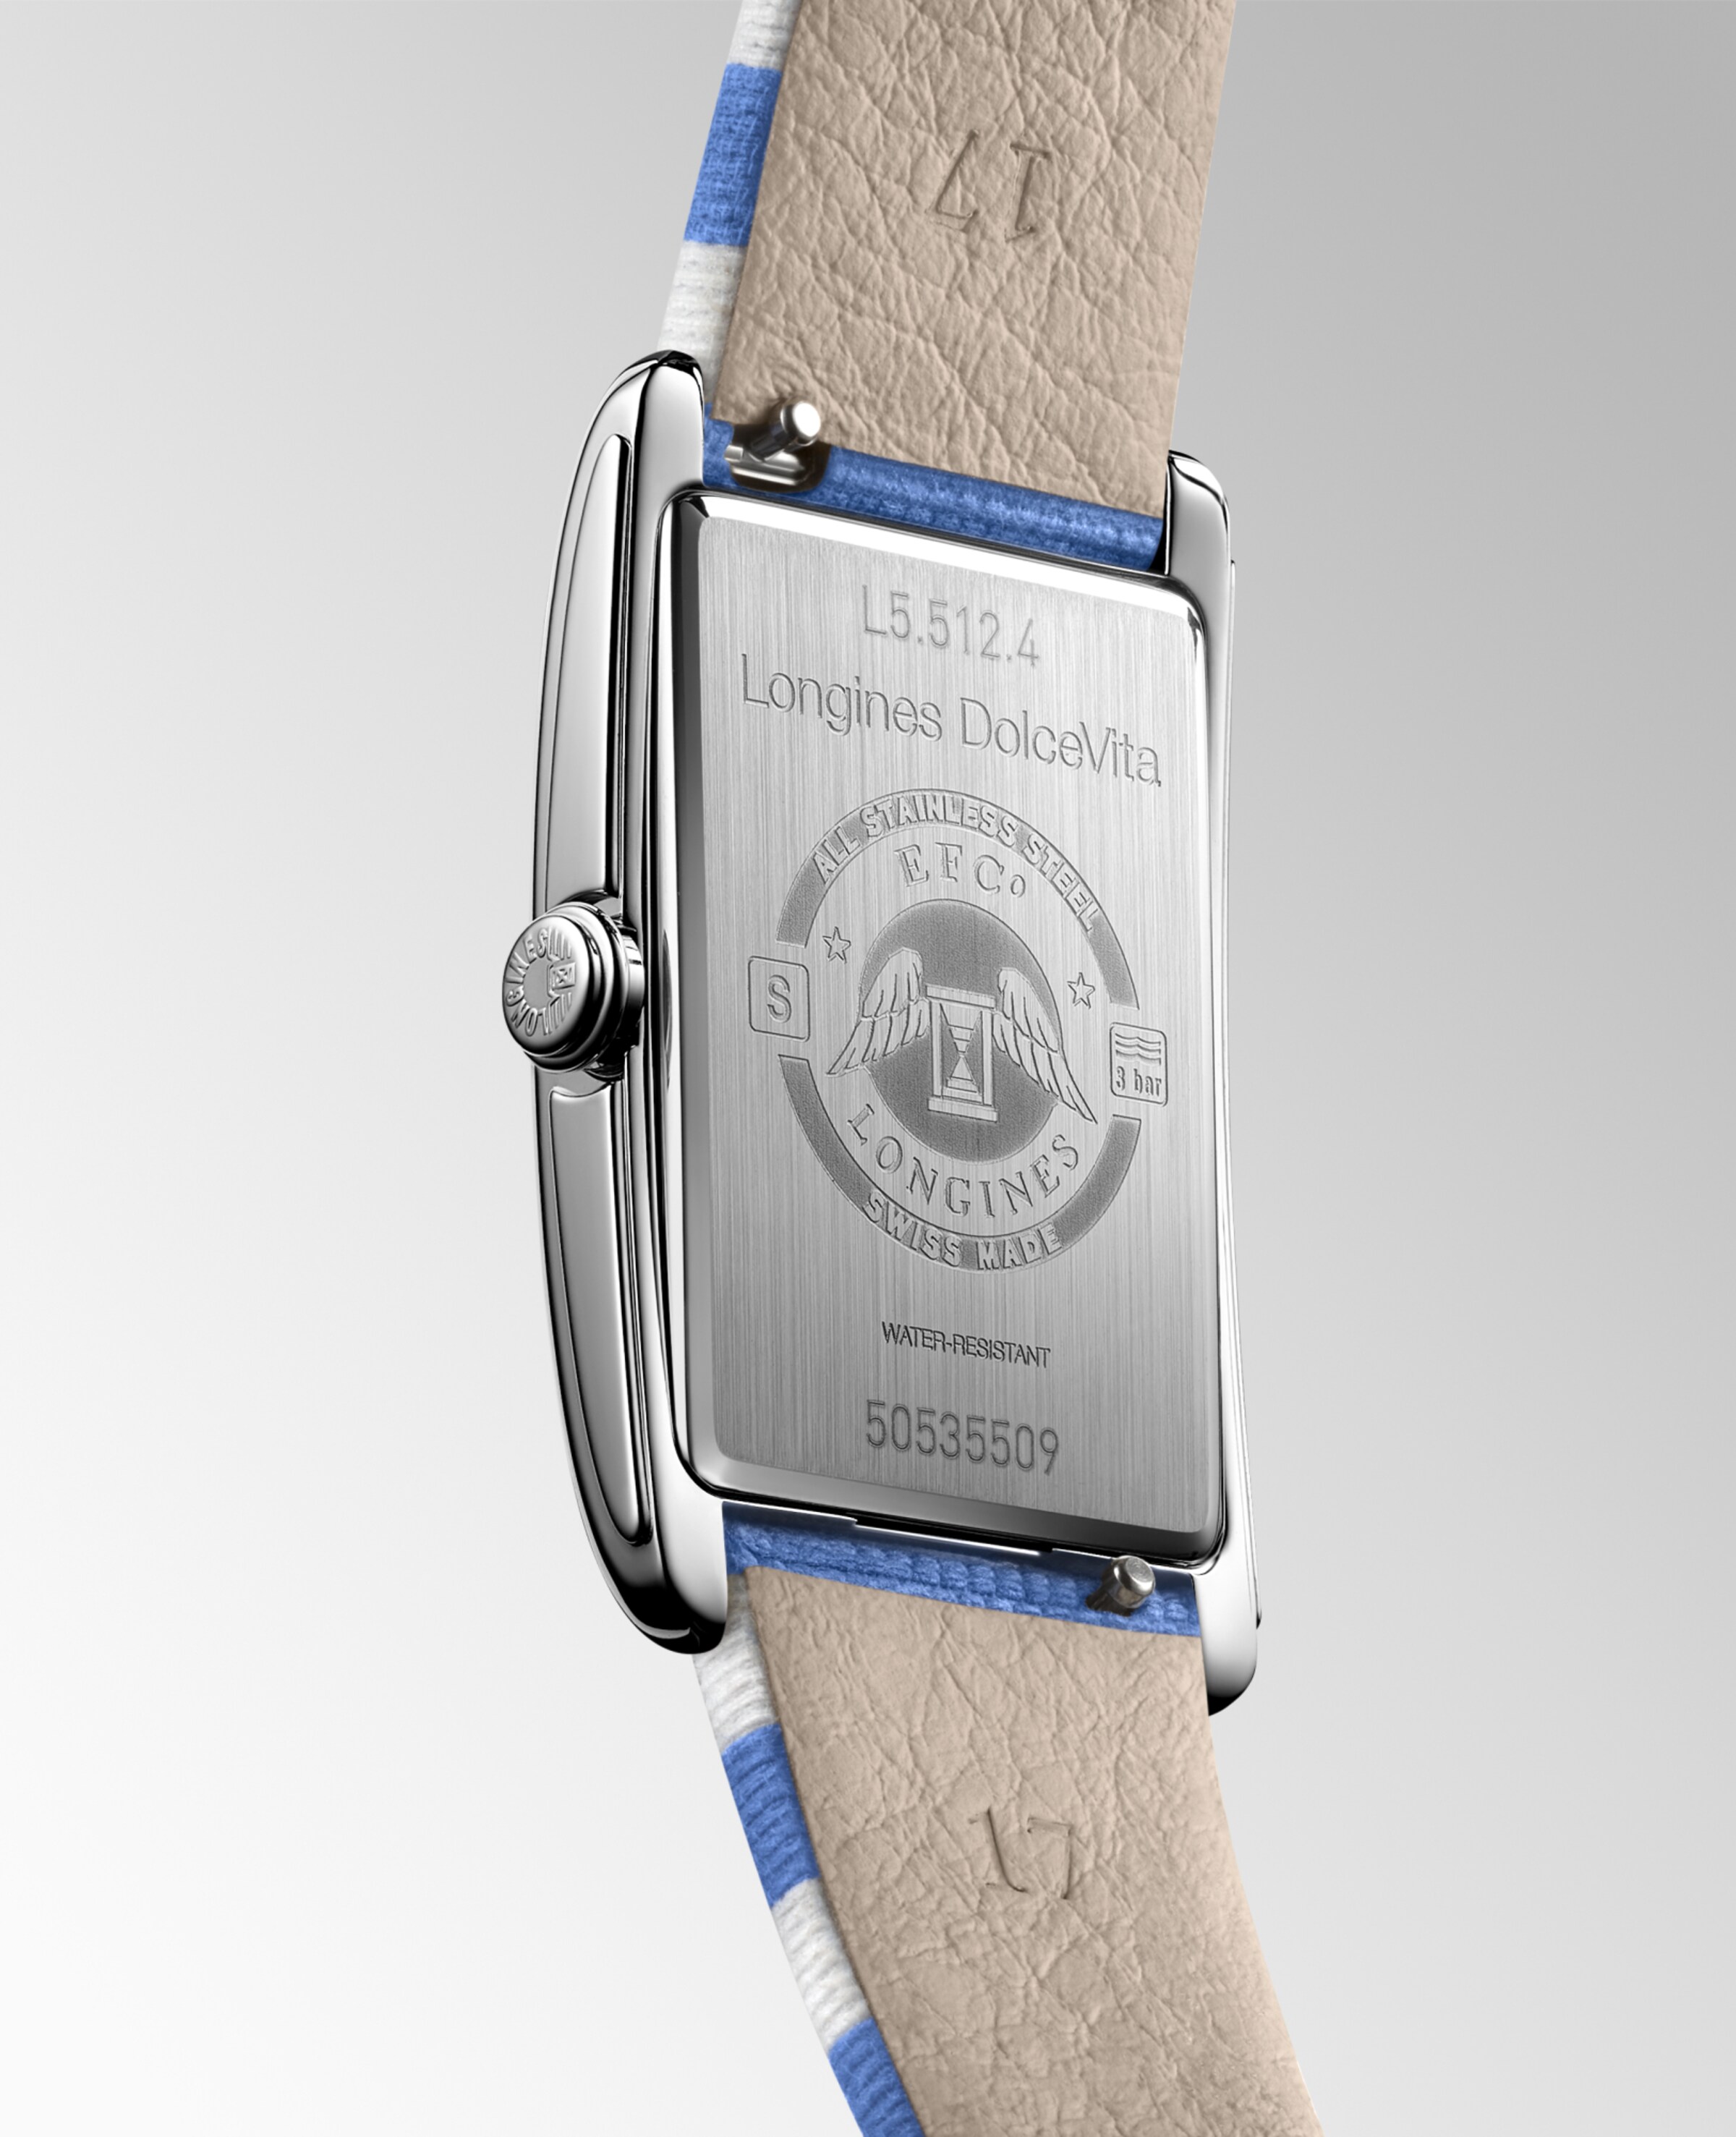 Longines DOLCEVITA Quartz Stainless steel Watch - L5.512.4.11.9